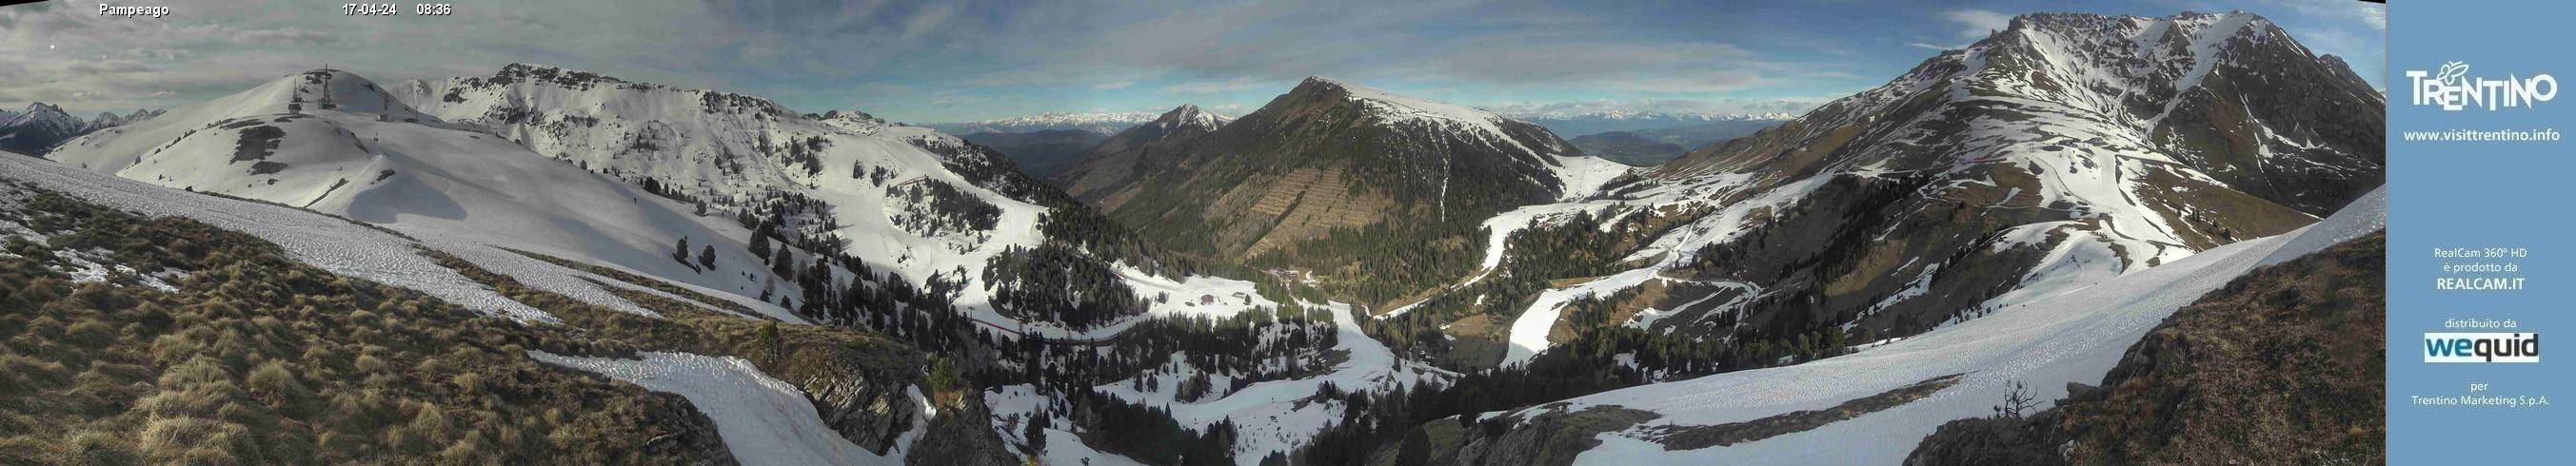 Webcam Panoramica Ski Center Latemar, Val di Fiemme - Dolomiti Superski